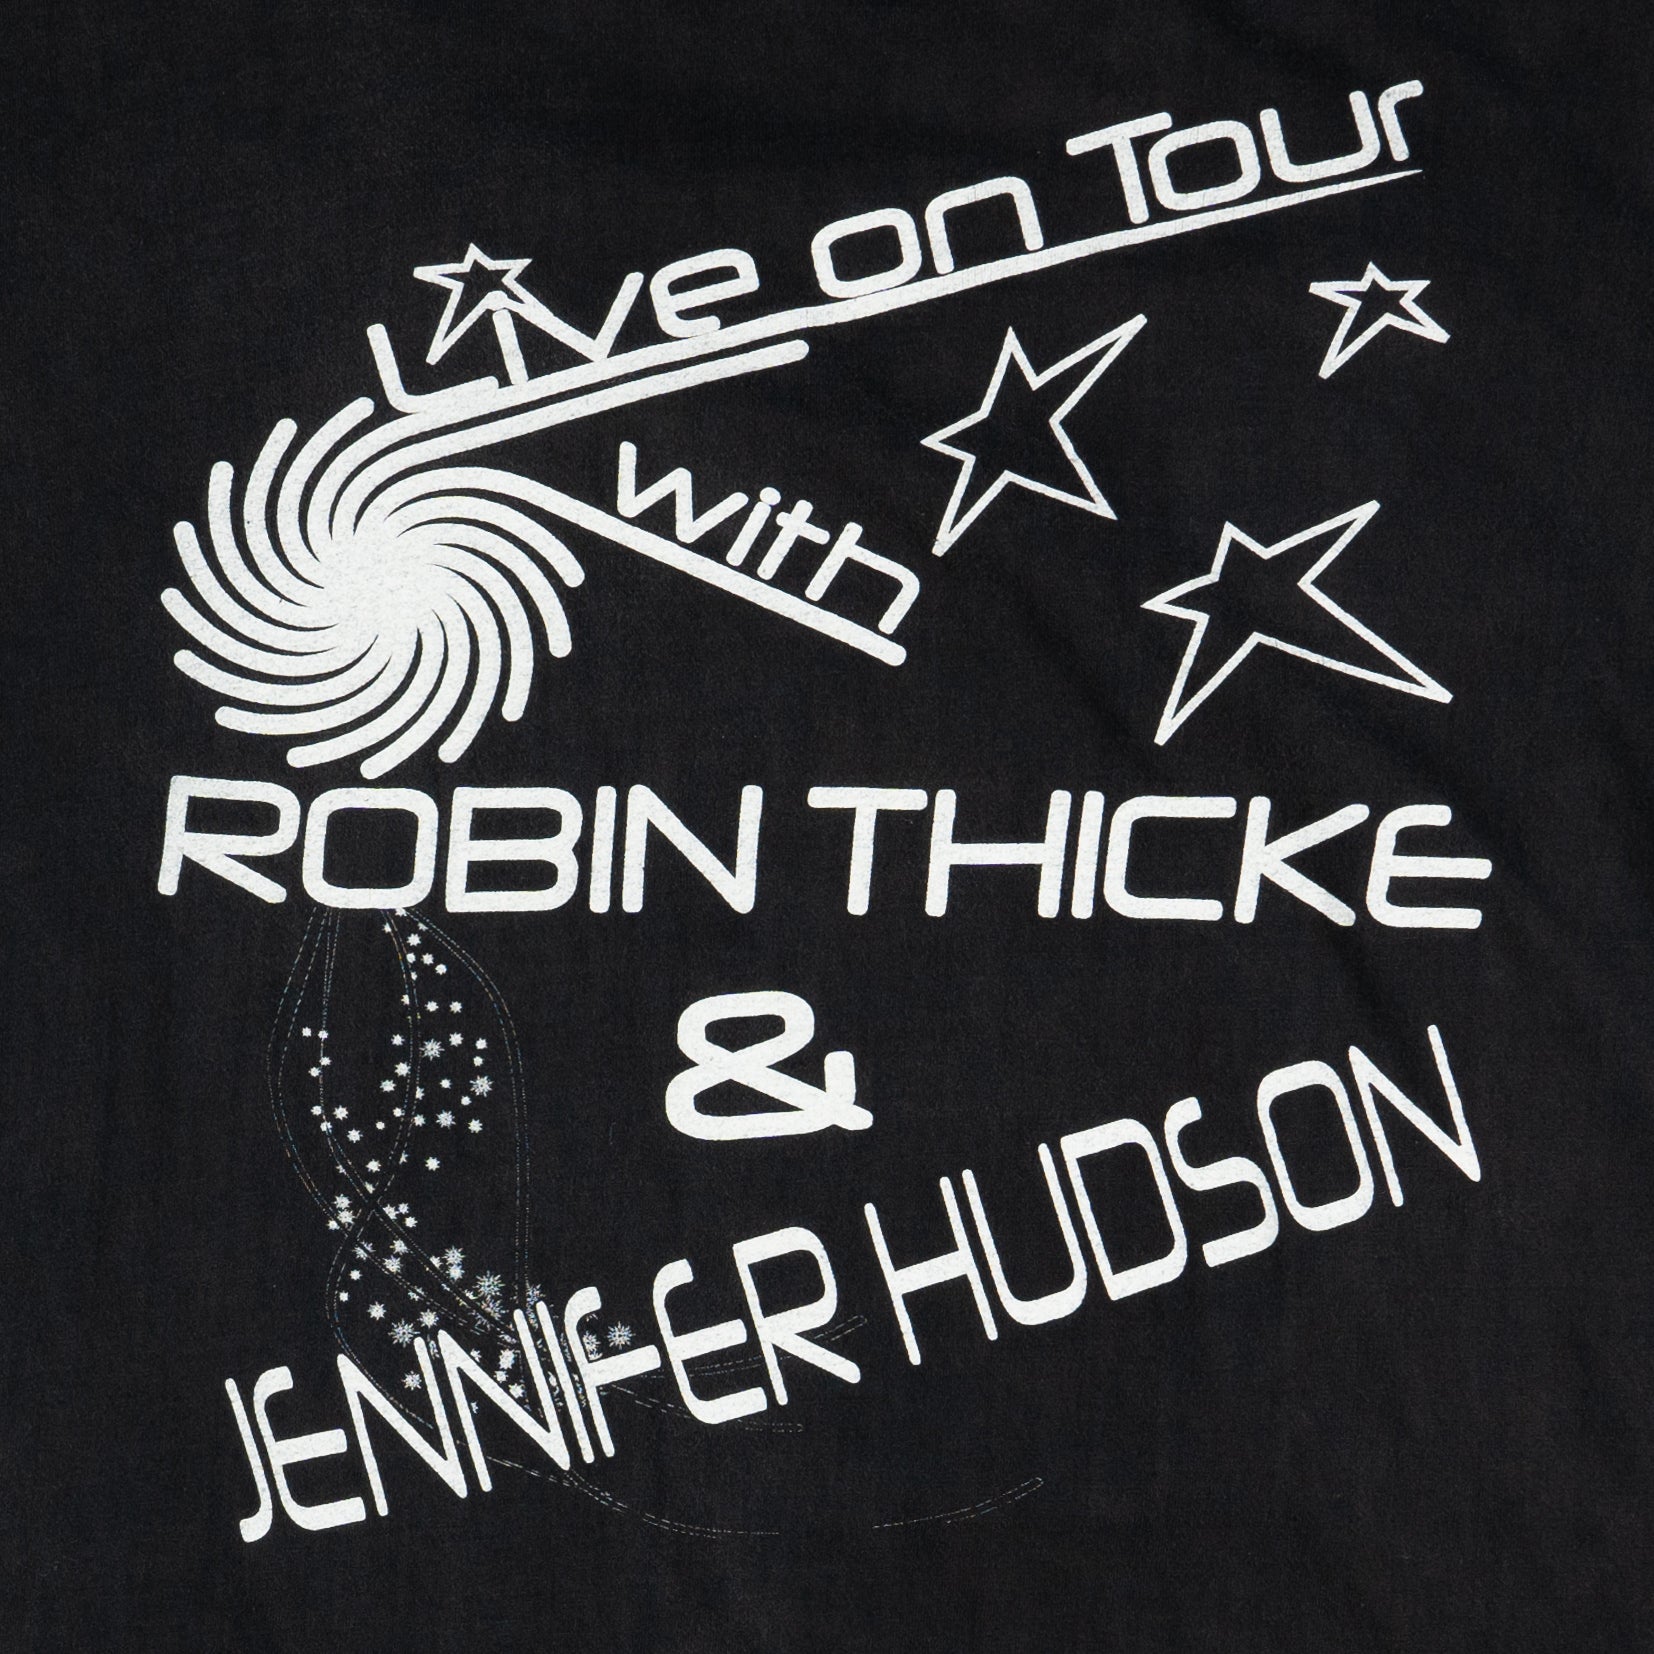 Robin Thicke & Jennifer Hudson Graphic Tee - Details